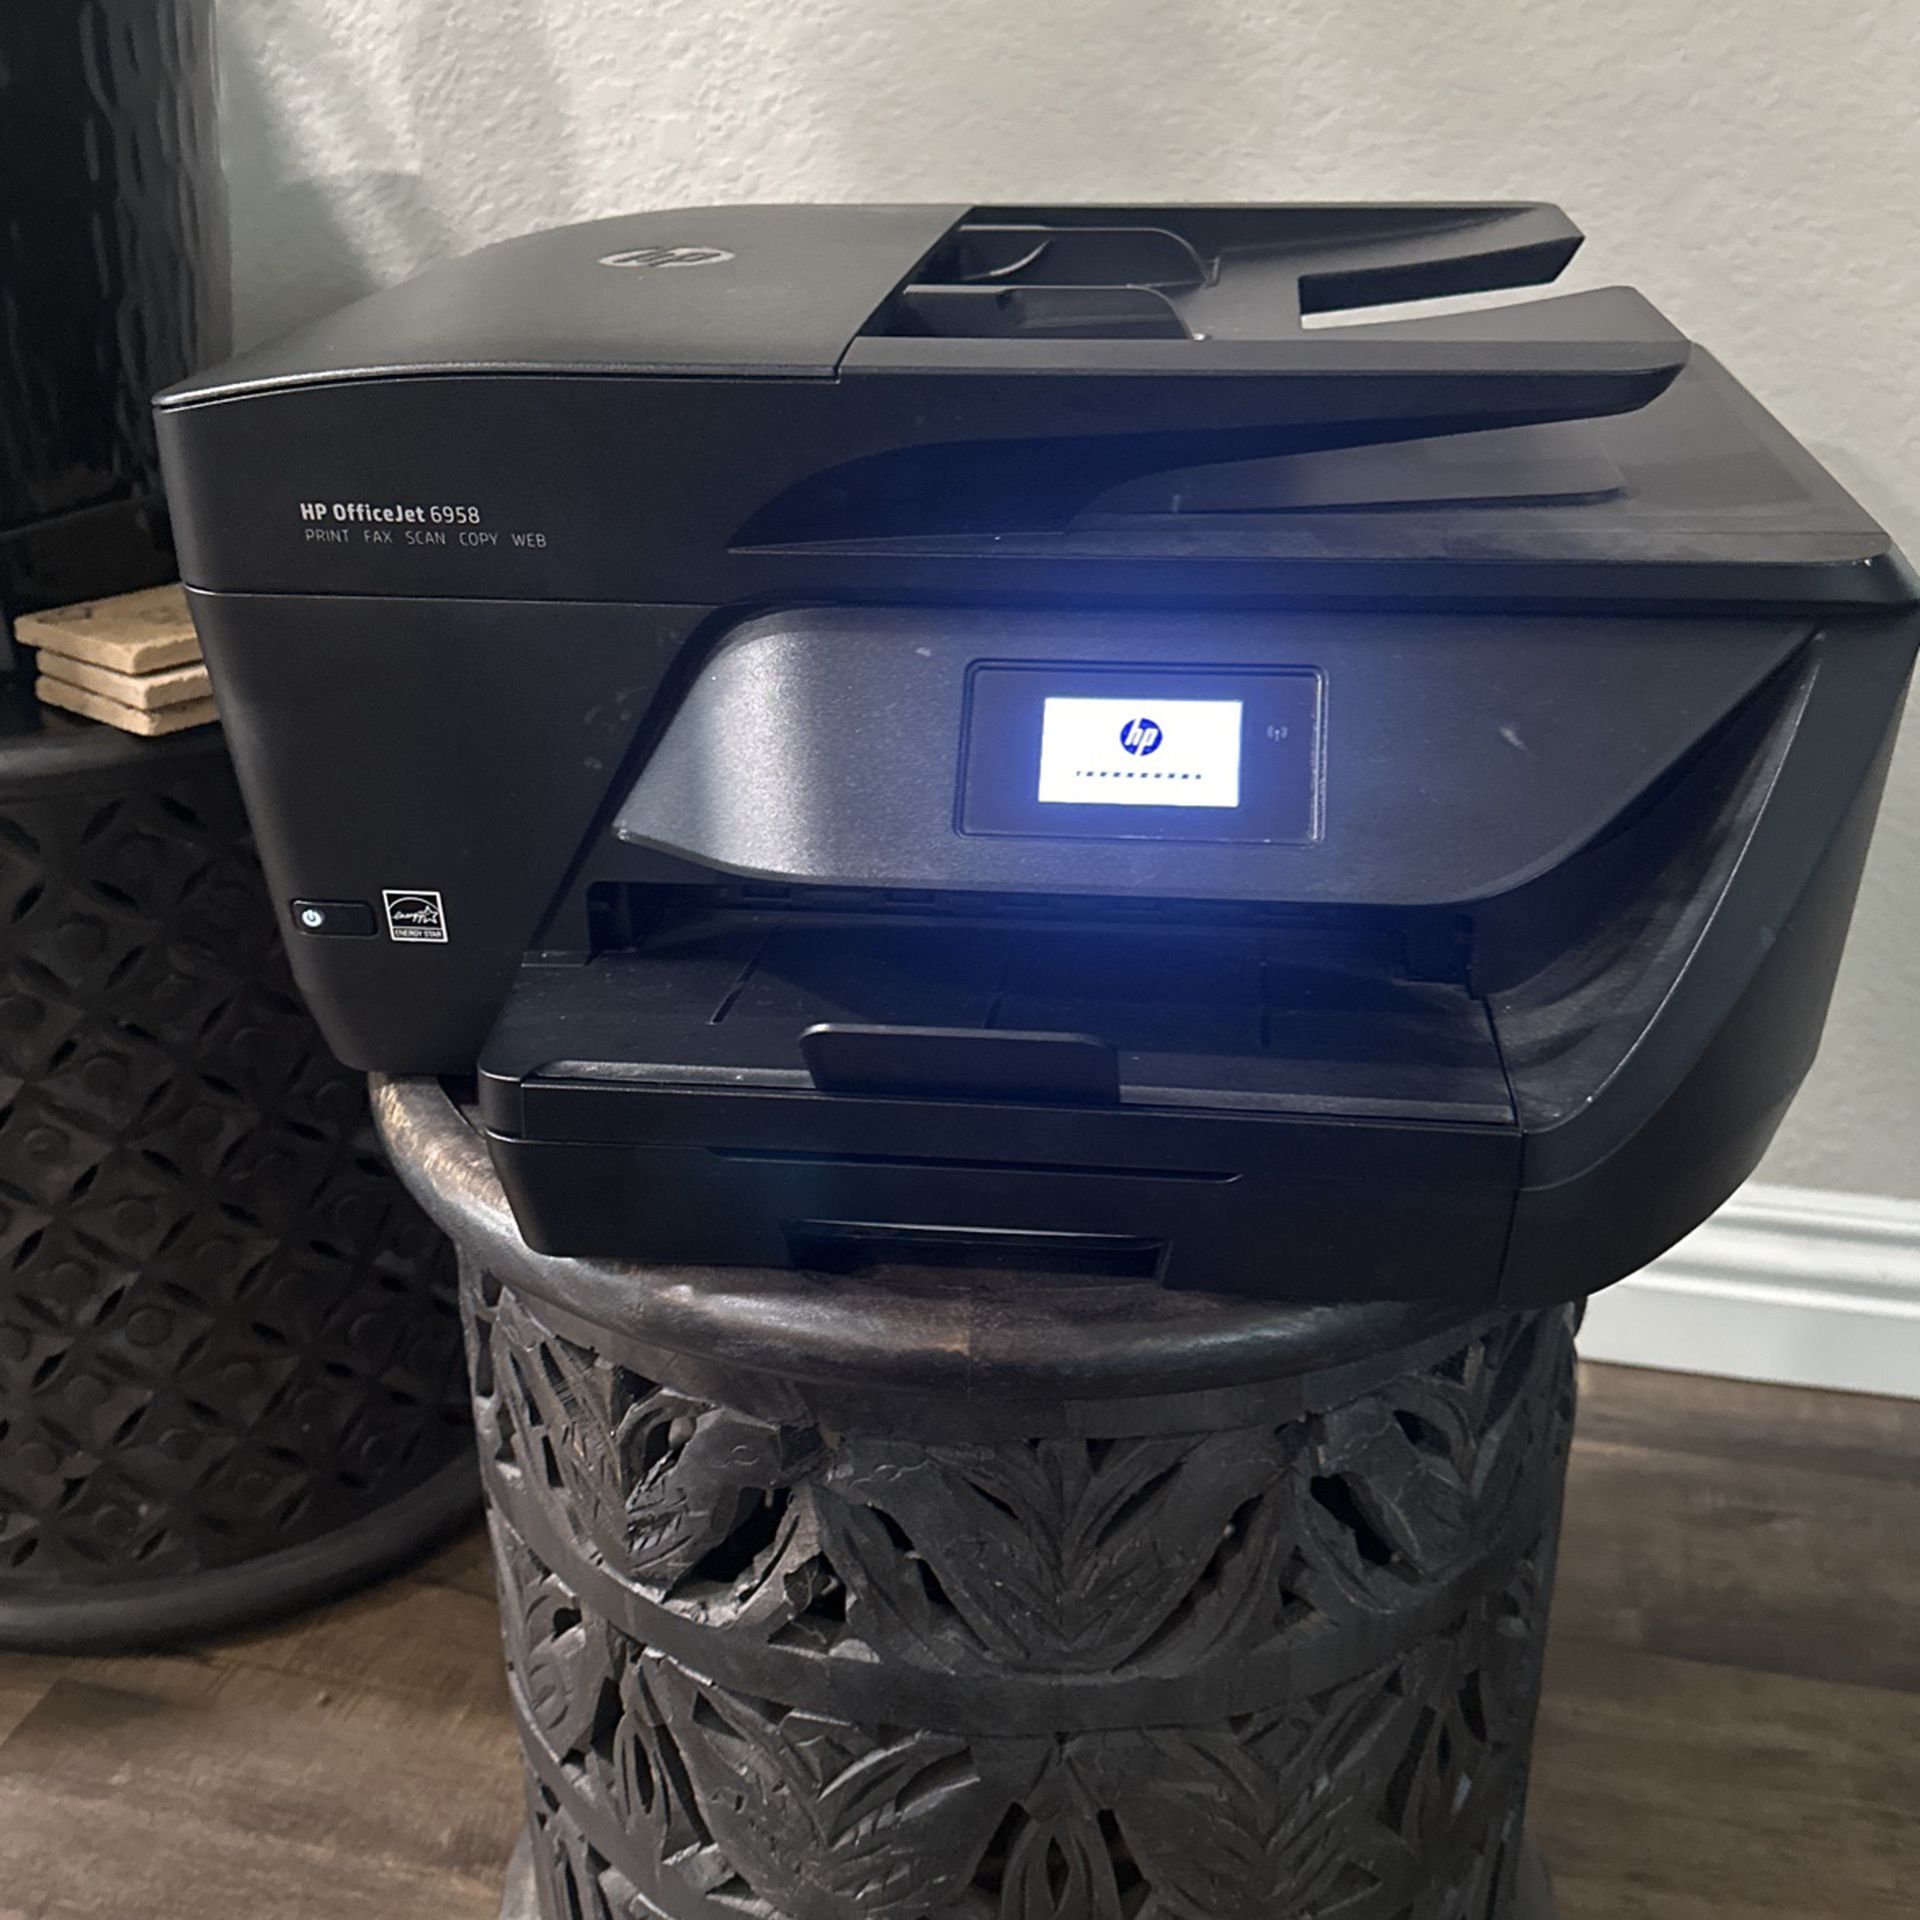 HP printer fax scanner